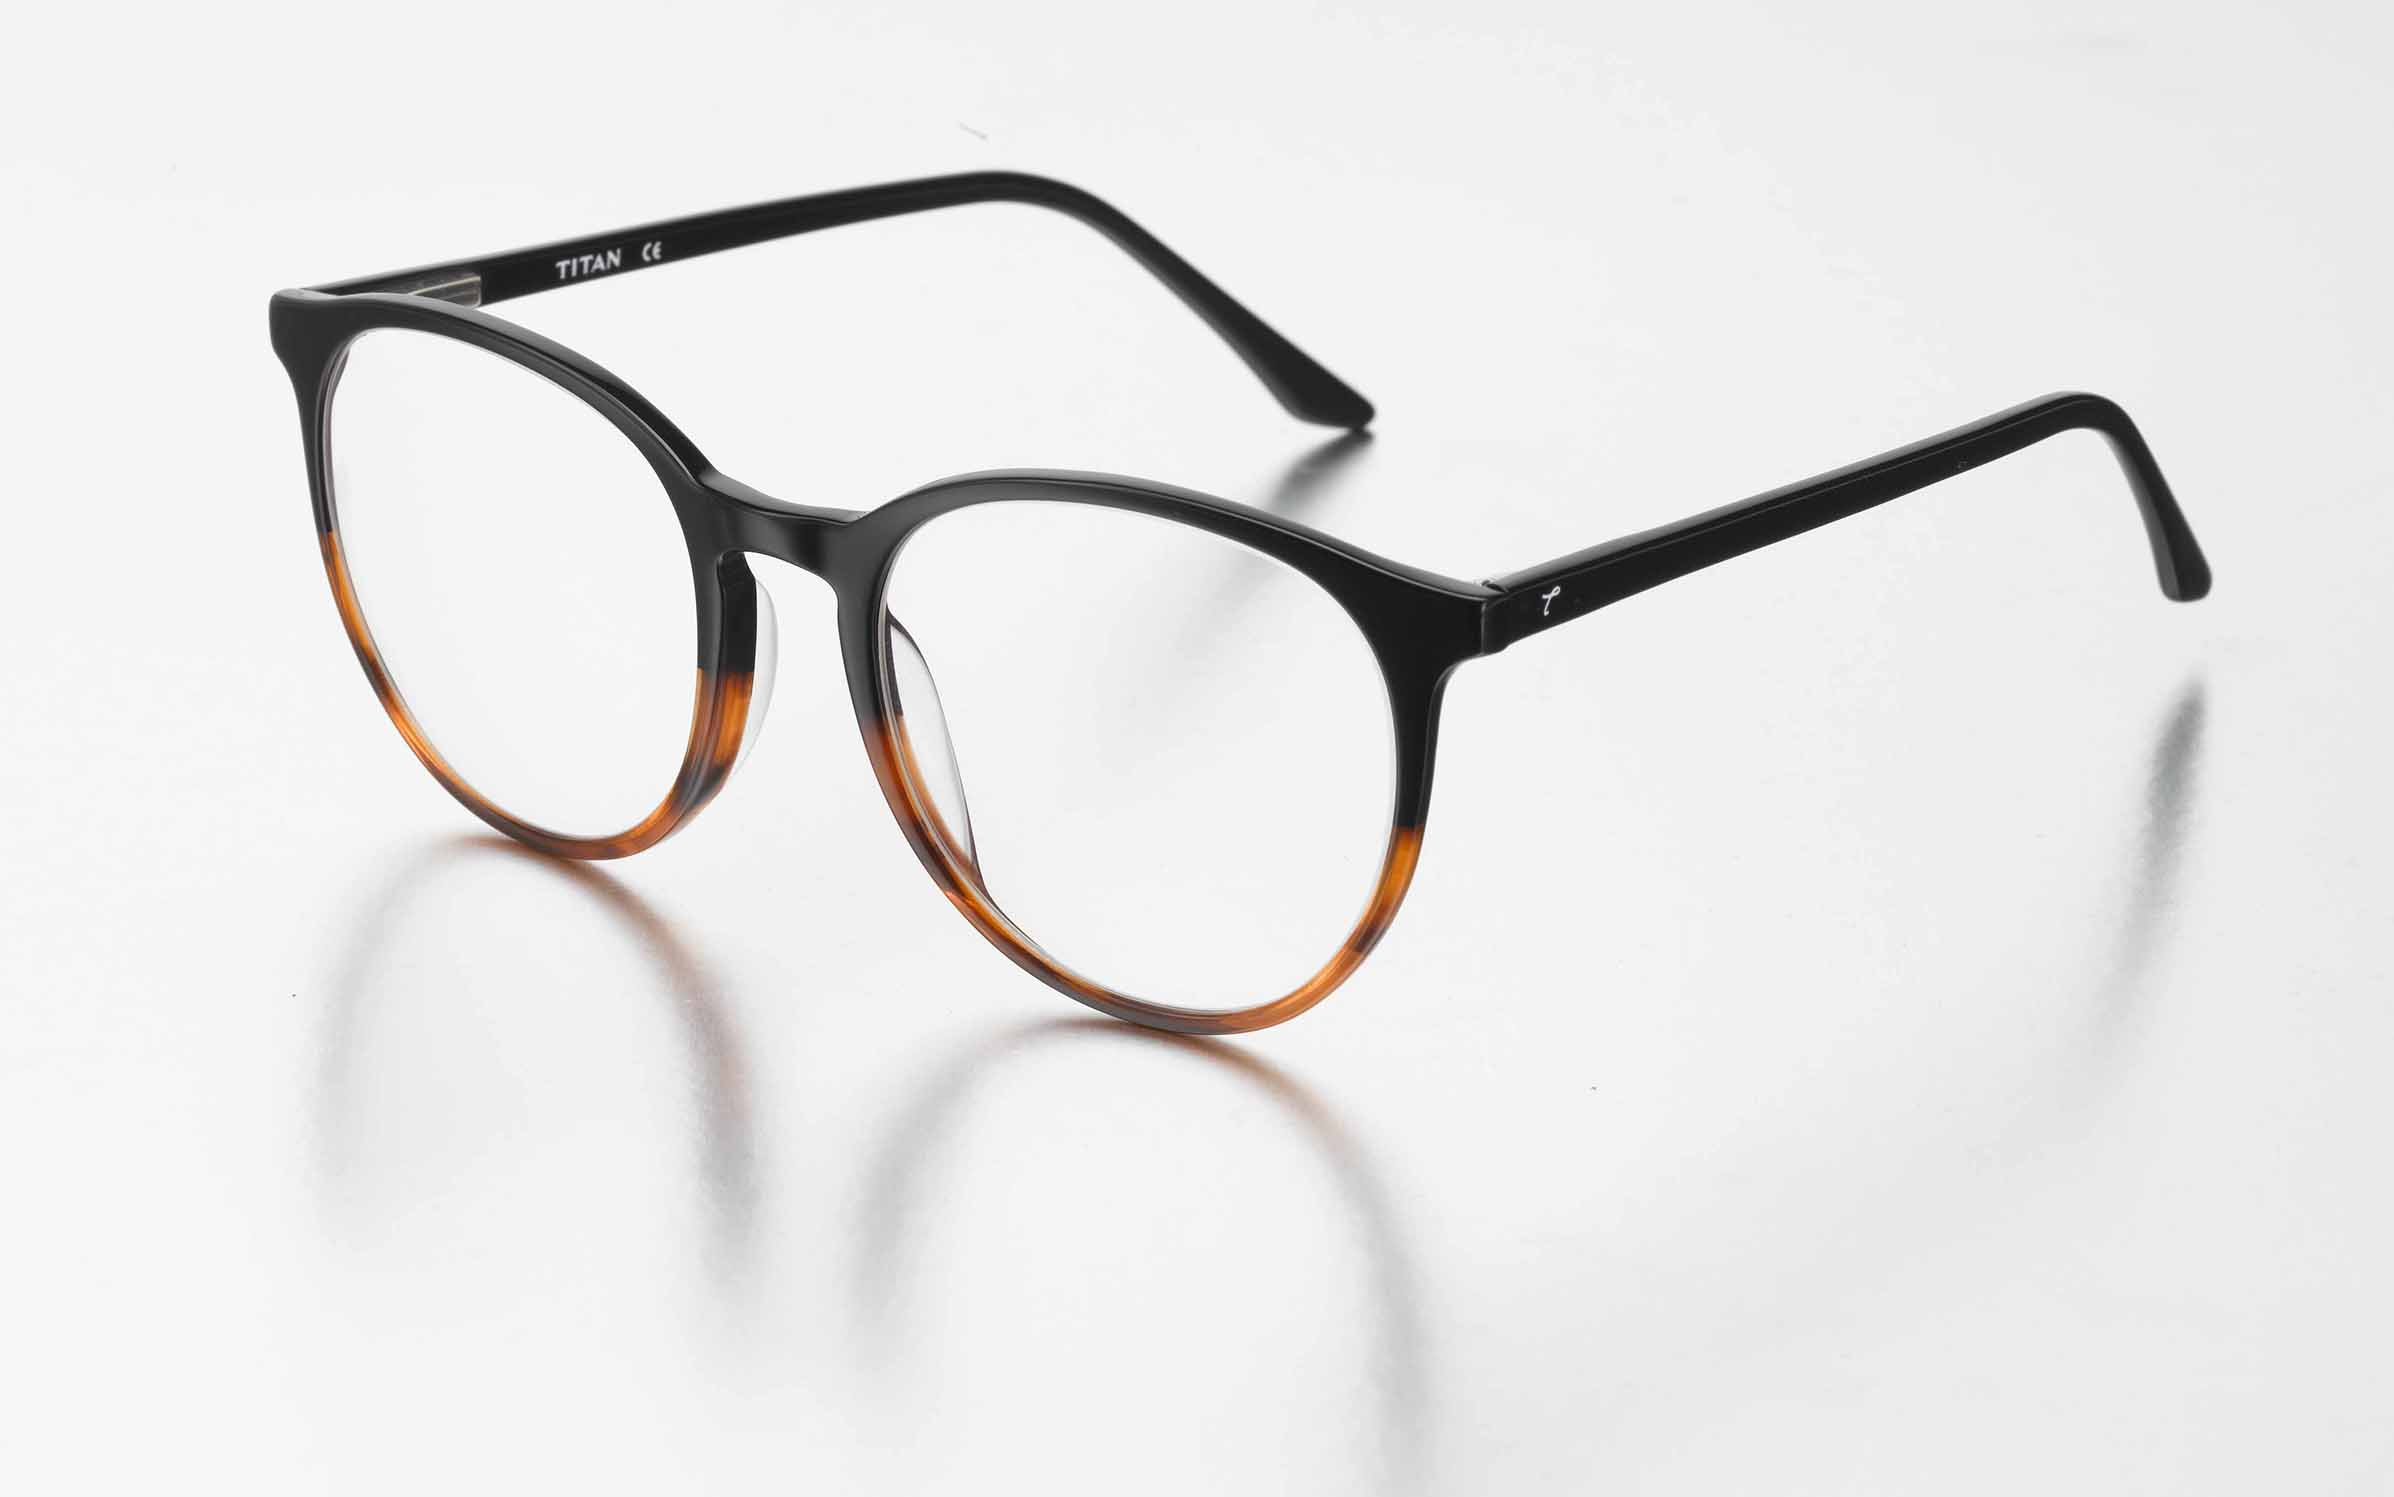 Titan Eye + очки 817 t6. Titan Eye + очки. Стандартный глаз оптика. Berlin Titan Glasses.